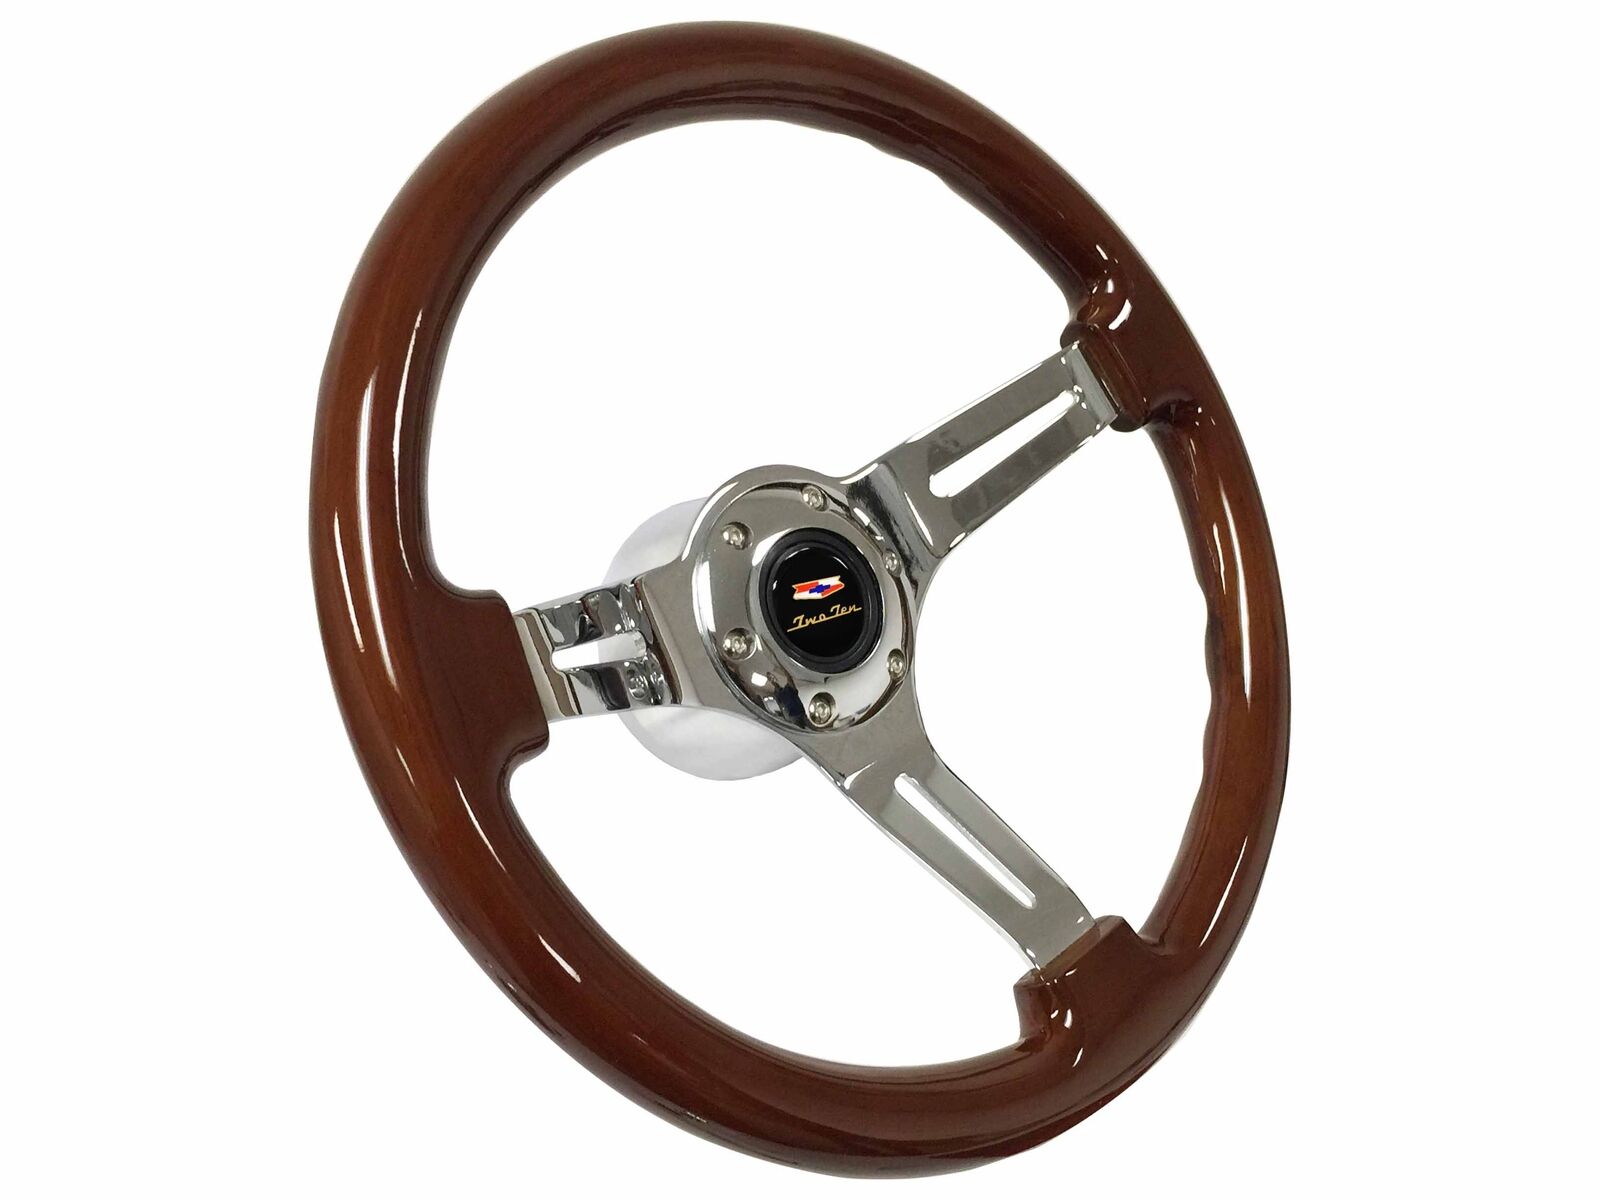 Chevy Two-Ten Mahogany Wood Steering Wheel Kit For GM Spline, IDIDIT Column